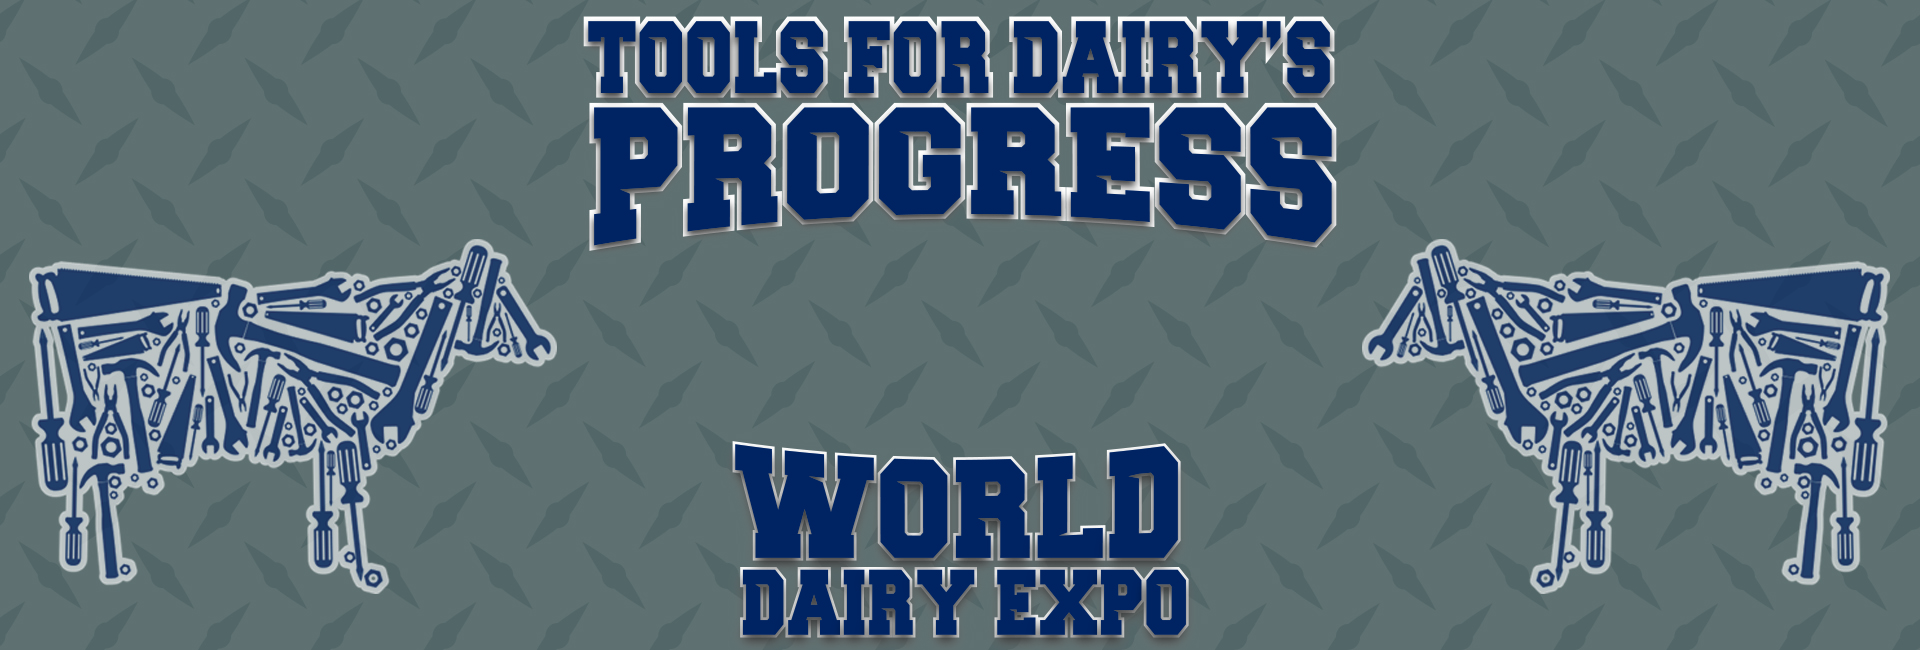 2021 Madison World Dairy Expo